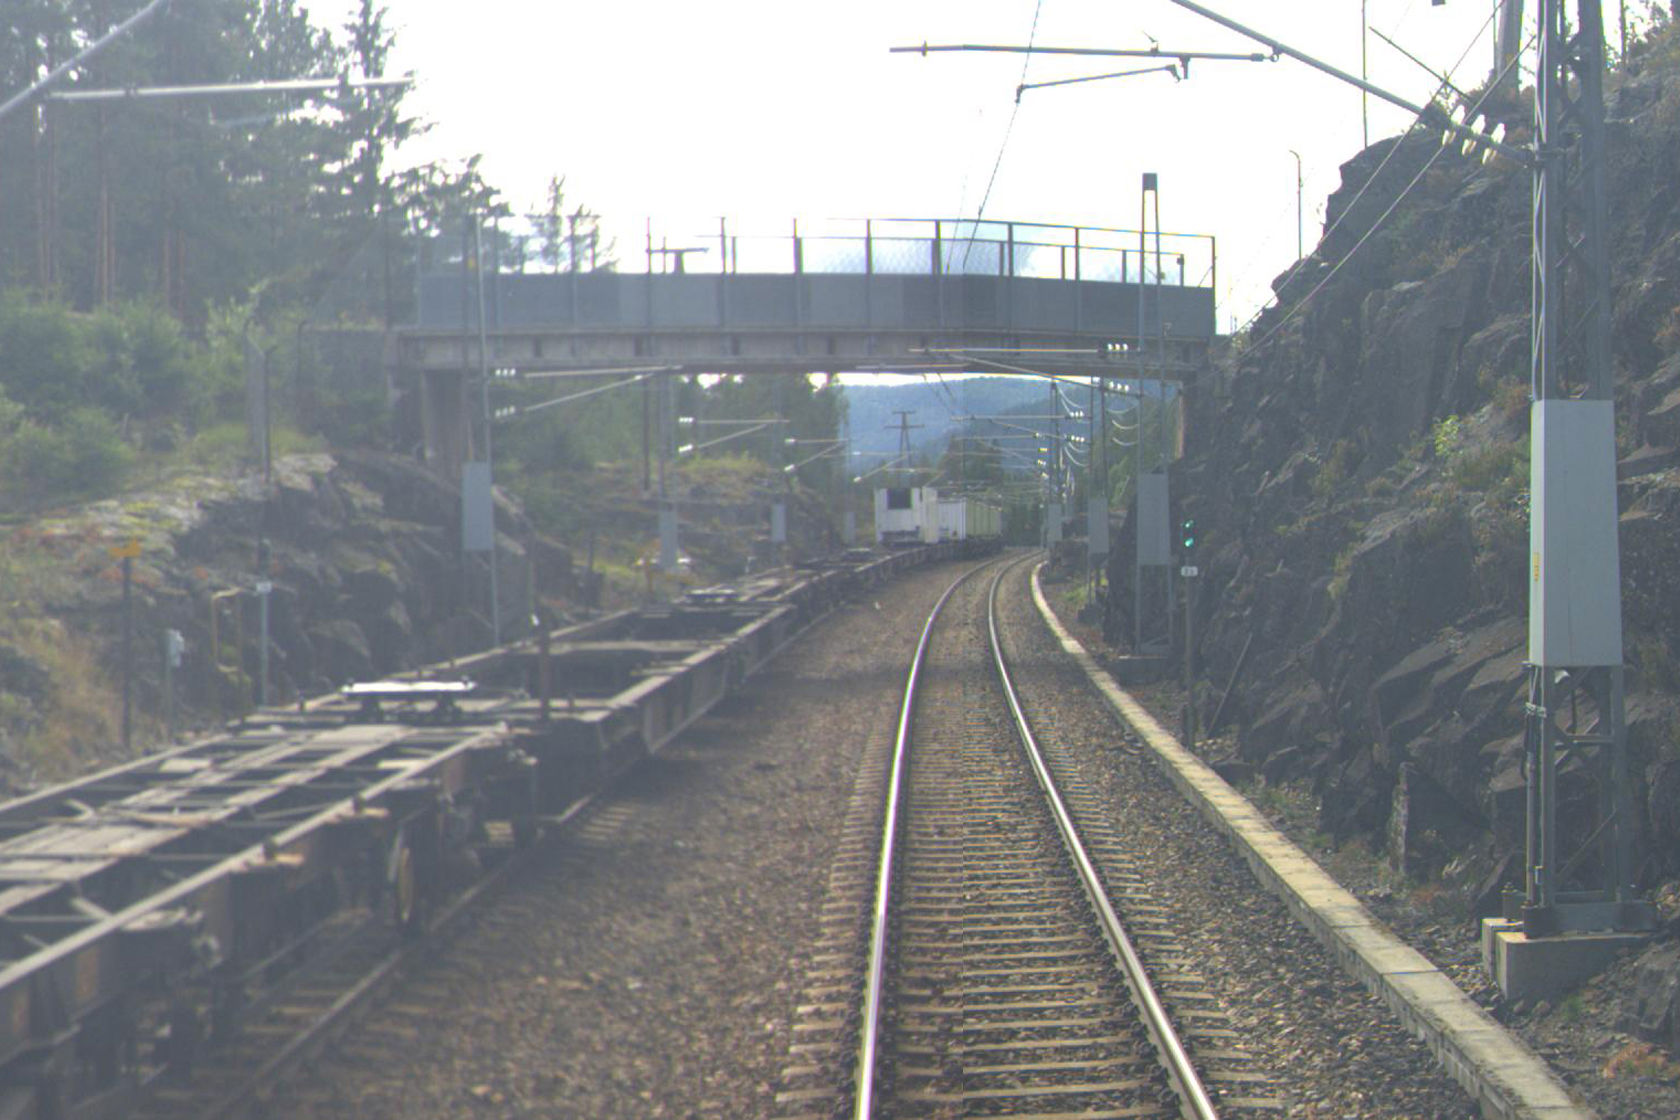 Tracks at Nakksjø station